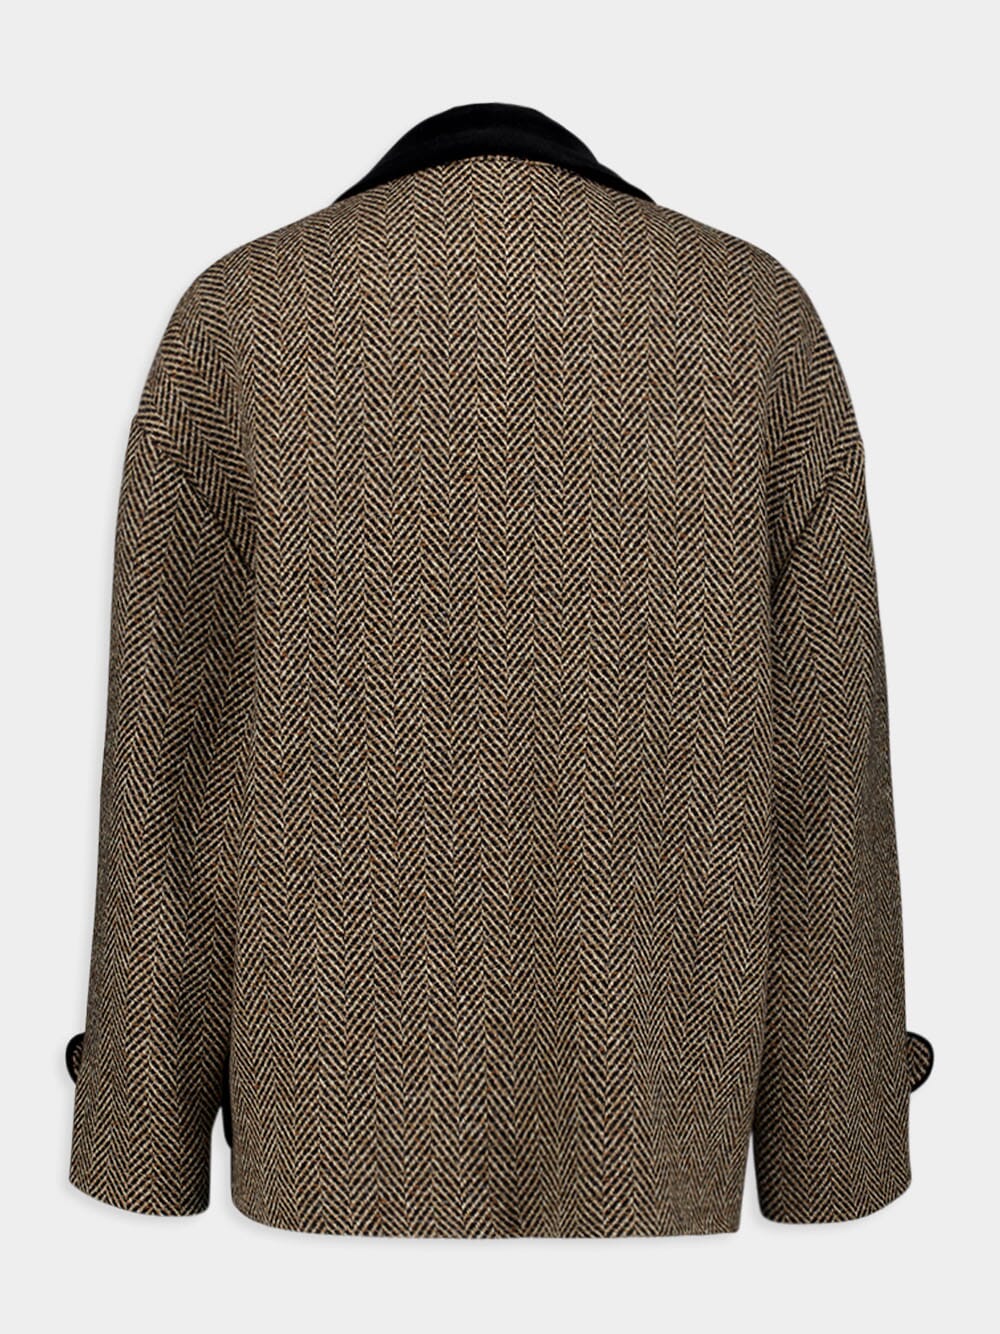 GucciVelvet-Trim Wool-Blend Herringbone Coat at Fashion Clinic